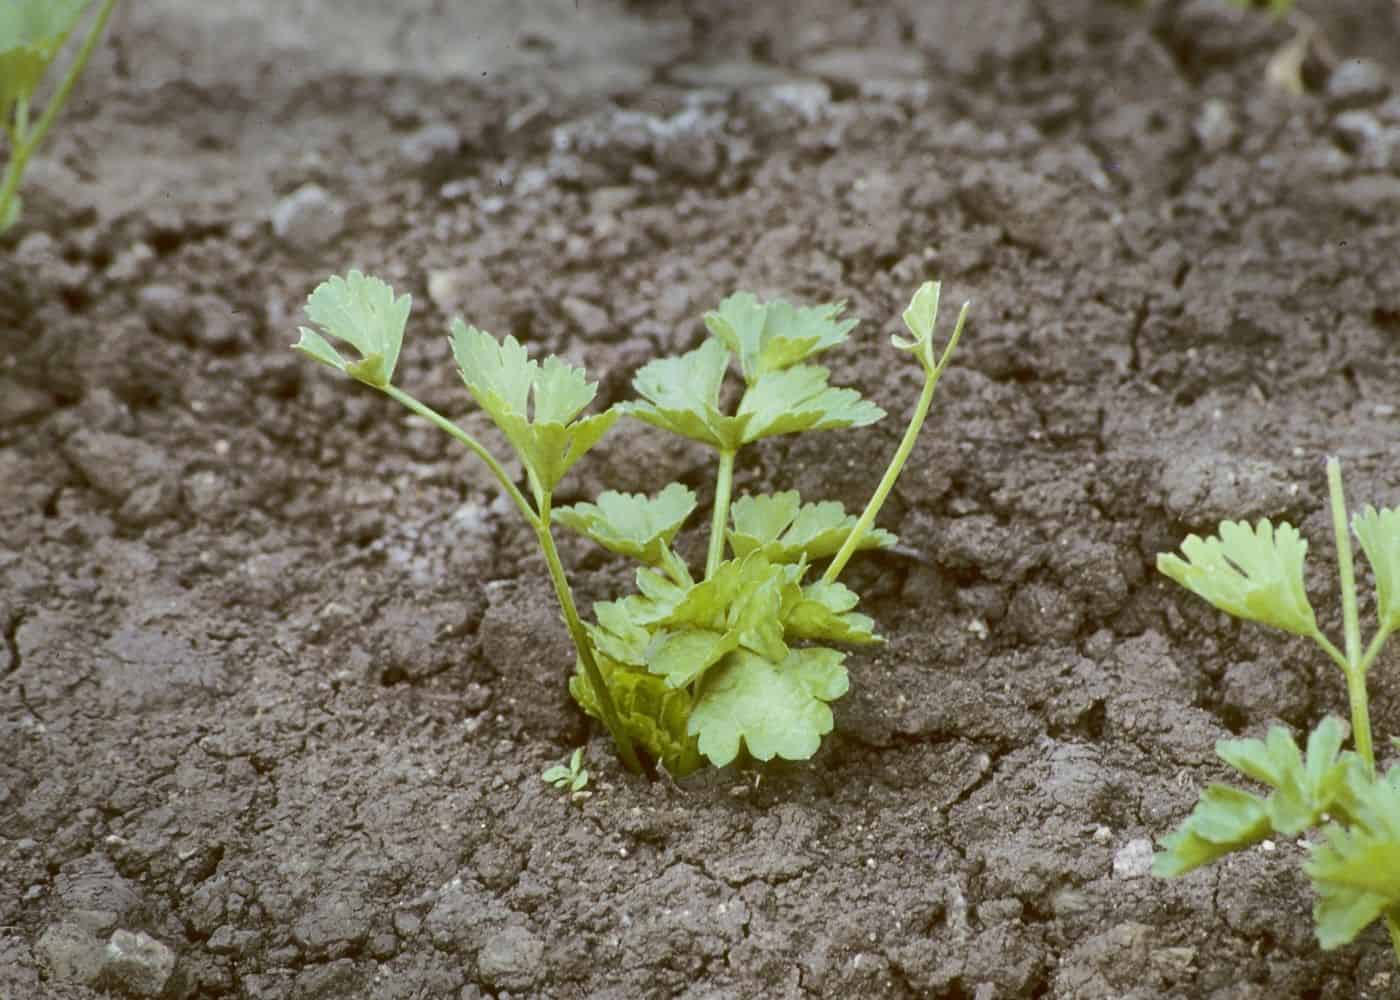 Celery - companion plants for potatoes